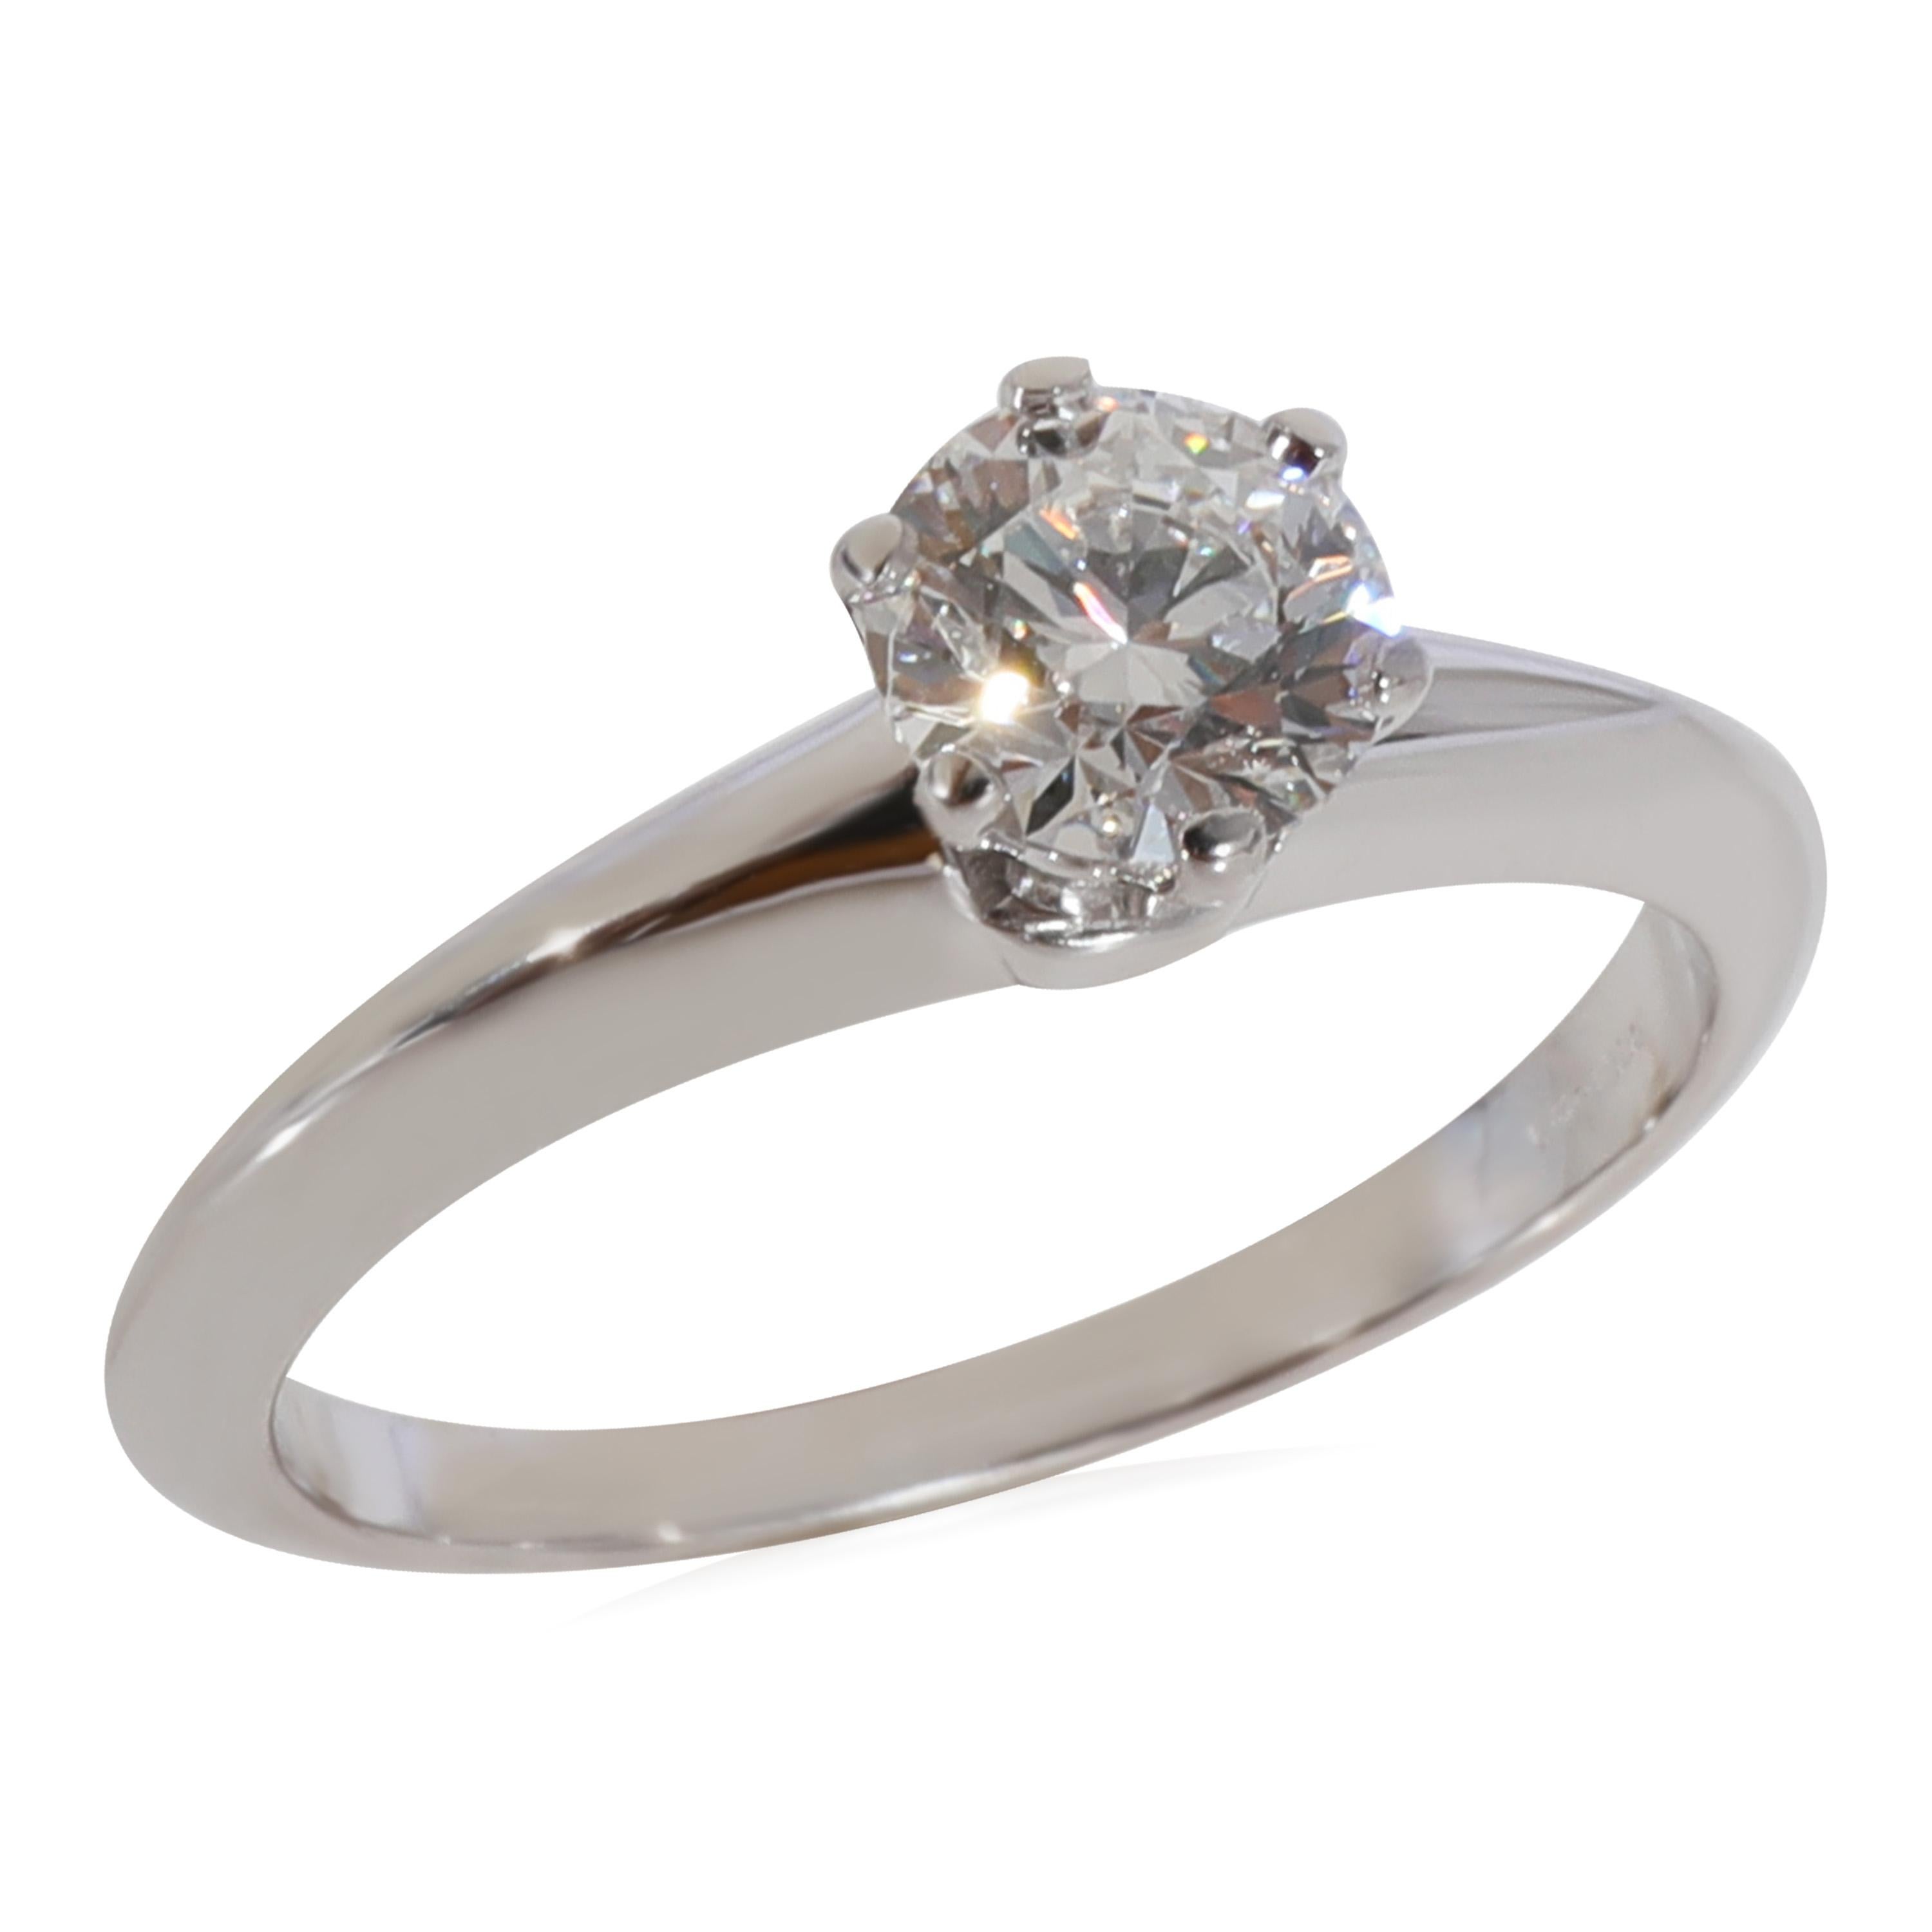 Women's Tiffany & Co. Diamond Solitaire Ring in Platinum D VVS2